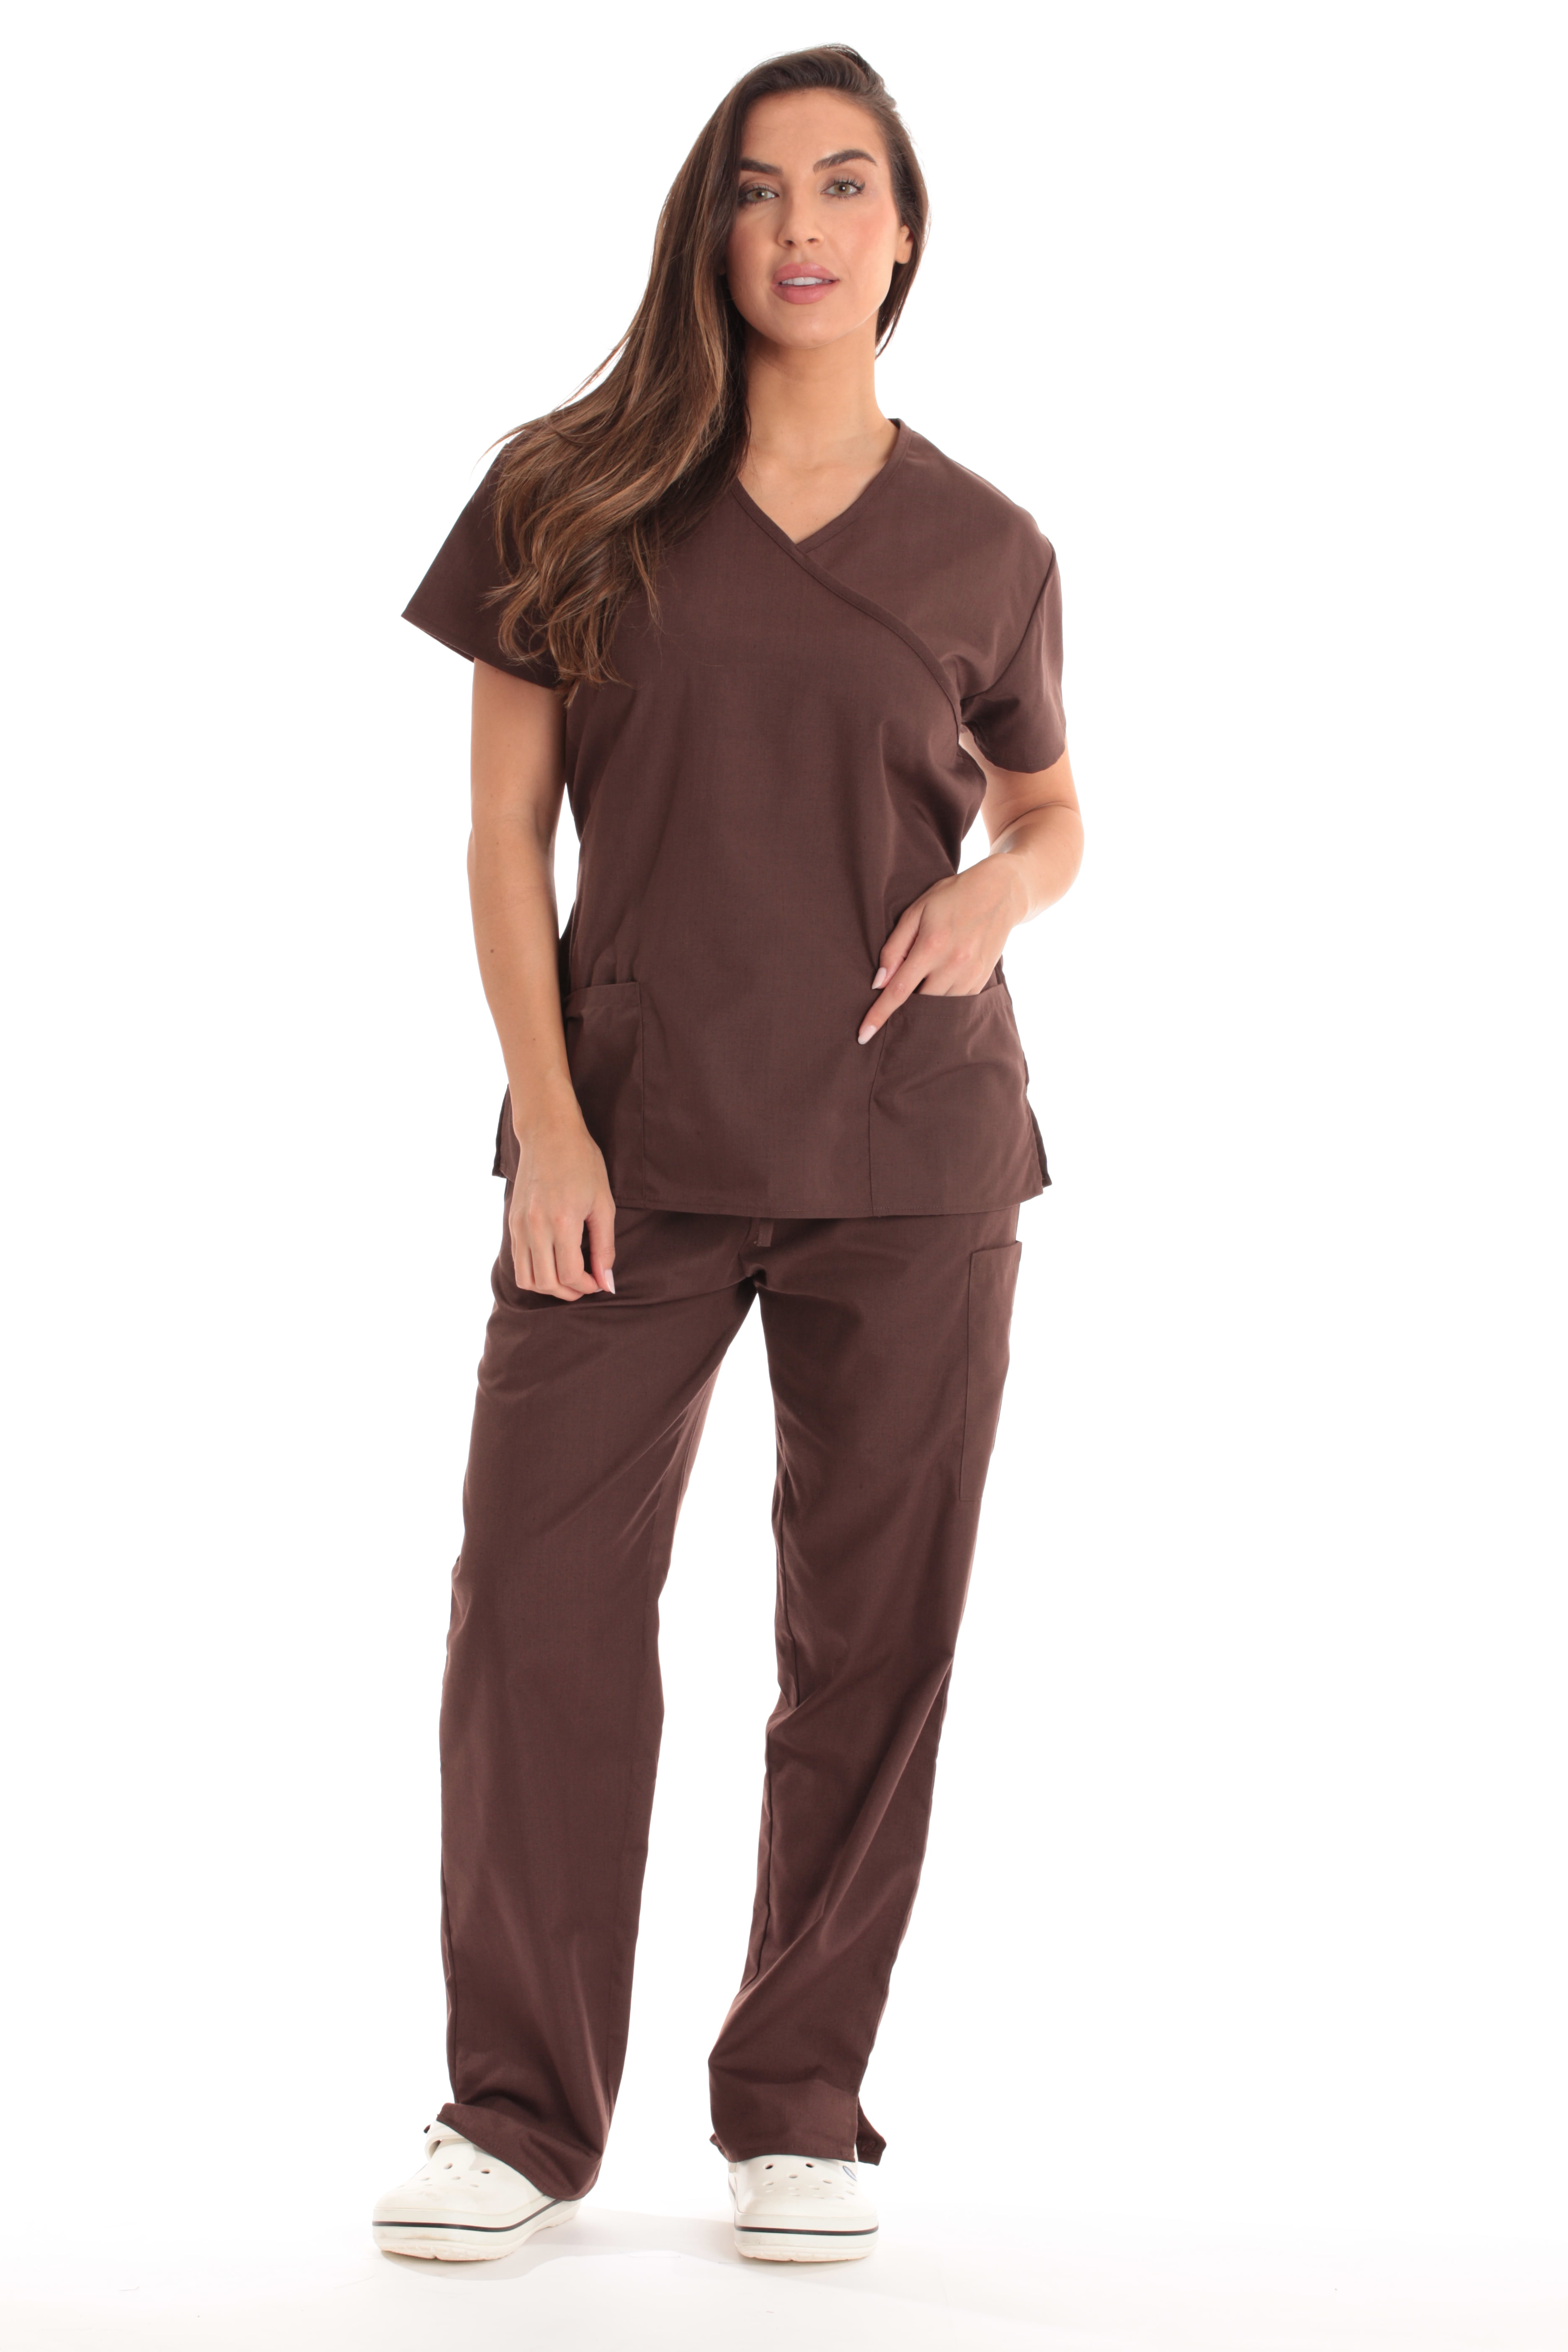 Just Love Women's Scrub Sets - Comfortable Medical & Nursing Scrubs (Ceil  with Navy Trim, 2X)